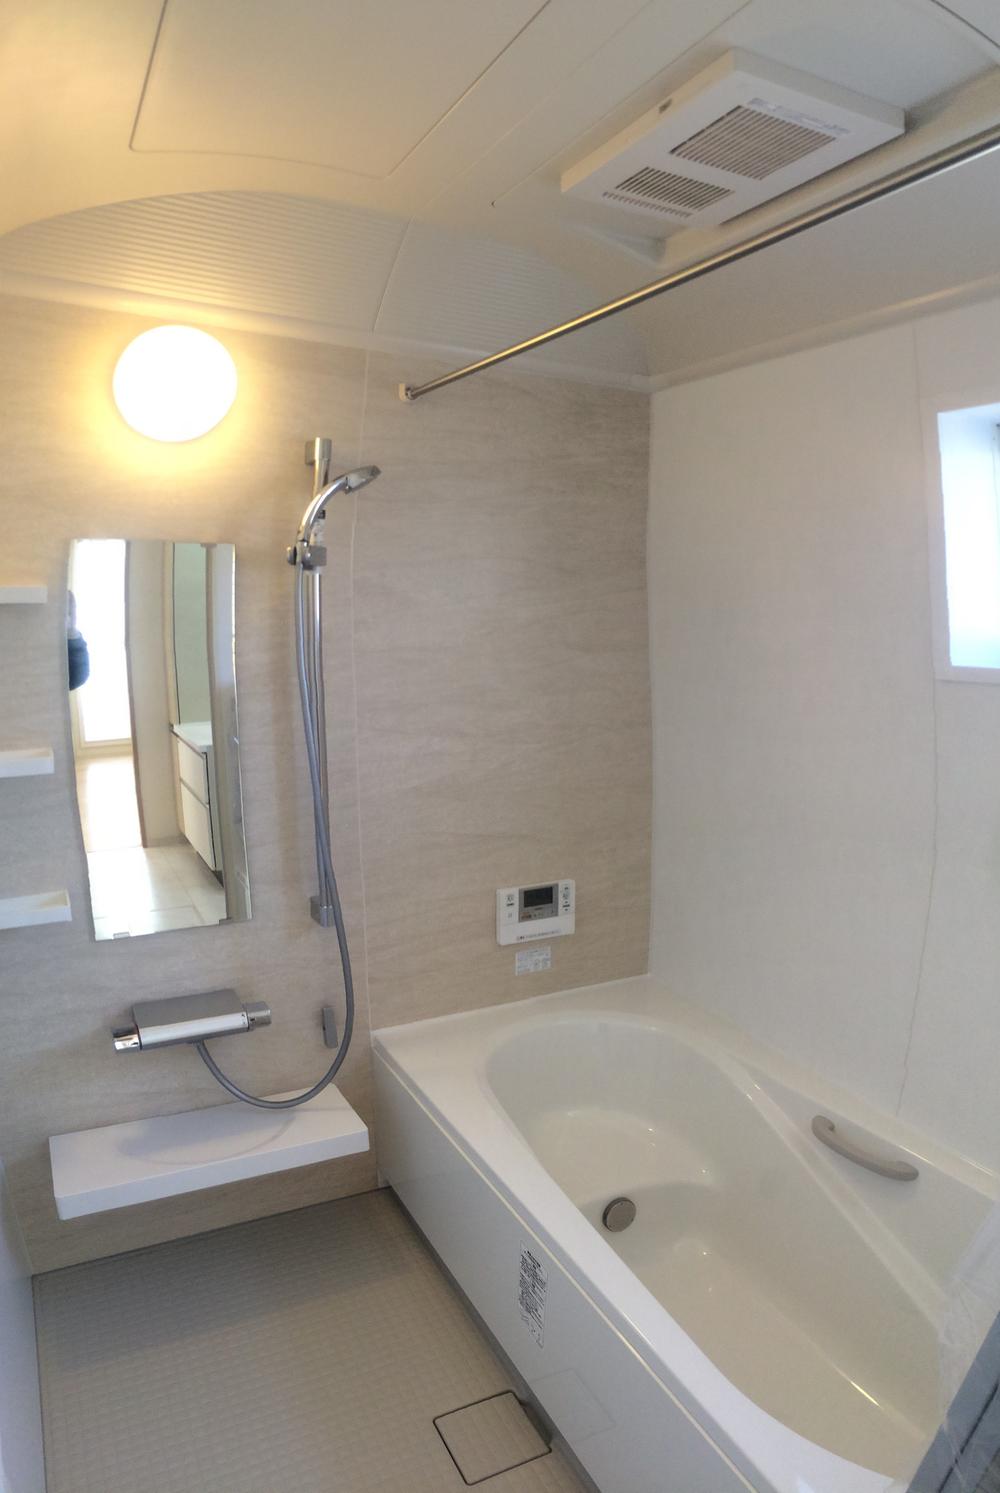 Bathroom.  [11-15]  The spacious bathroom of the dome ceiling, Bathroom Dryer, Enhanced functions, such as Samobasu. 